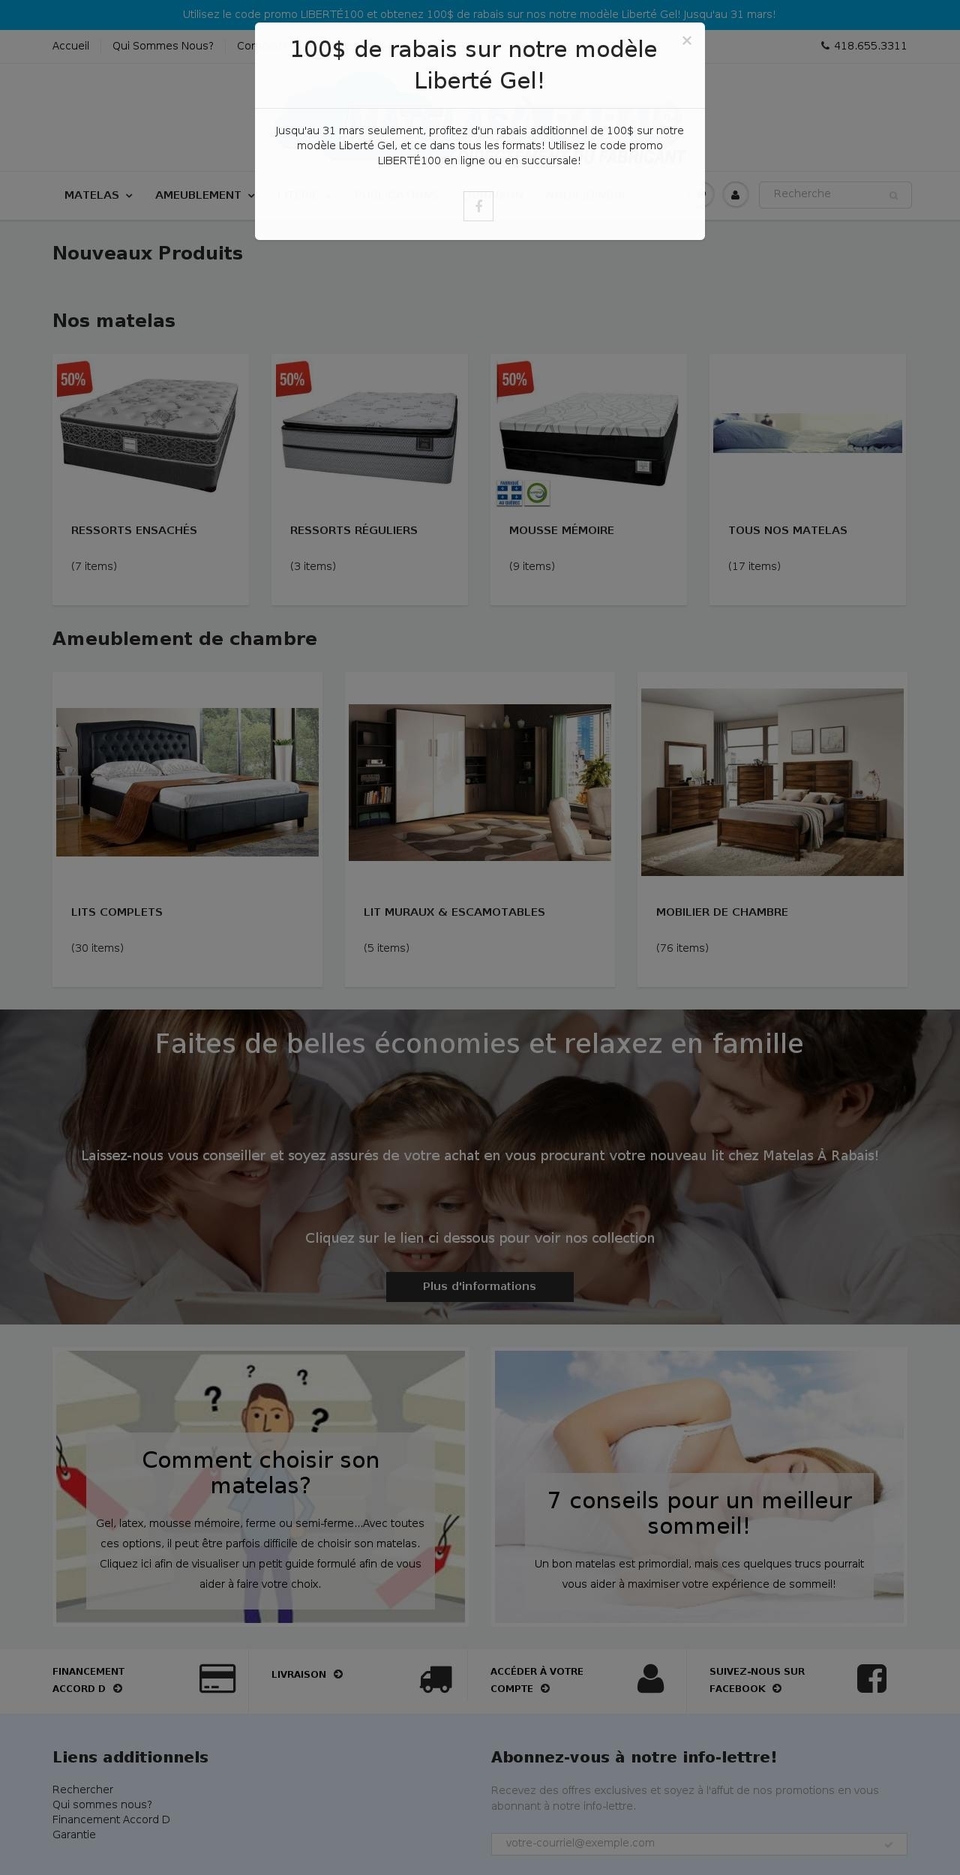 matelasarabais.ca shopify website screenshot